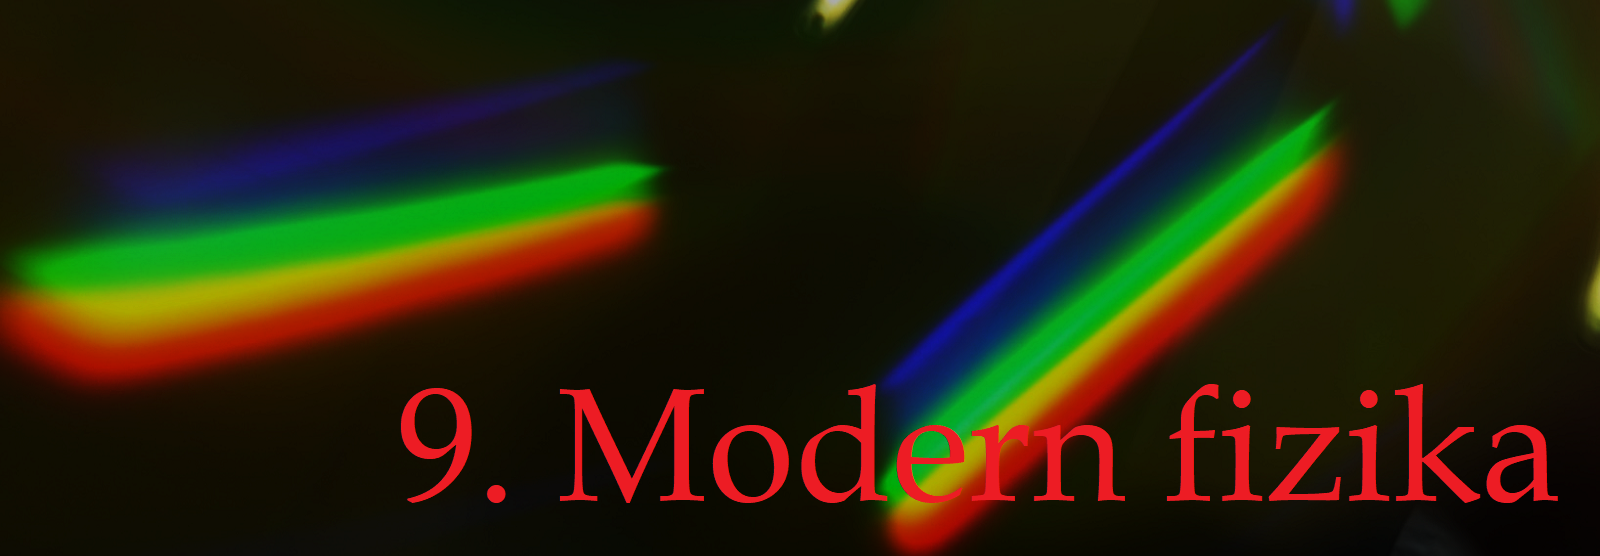 9 Modern fizika felirattal.png